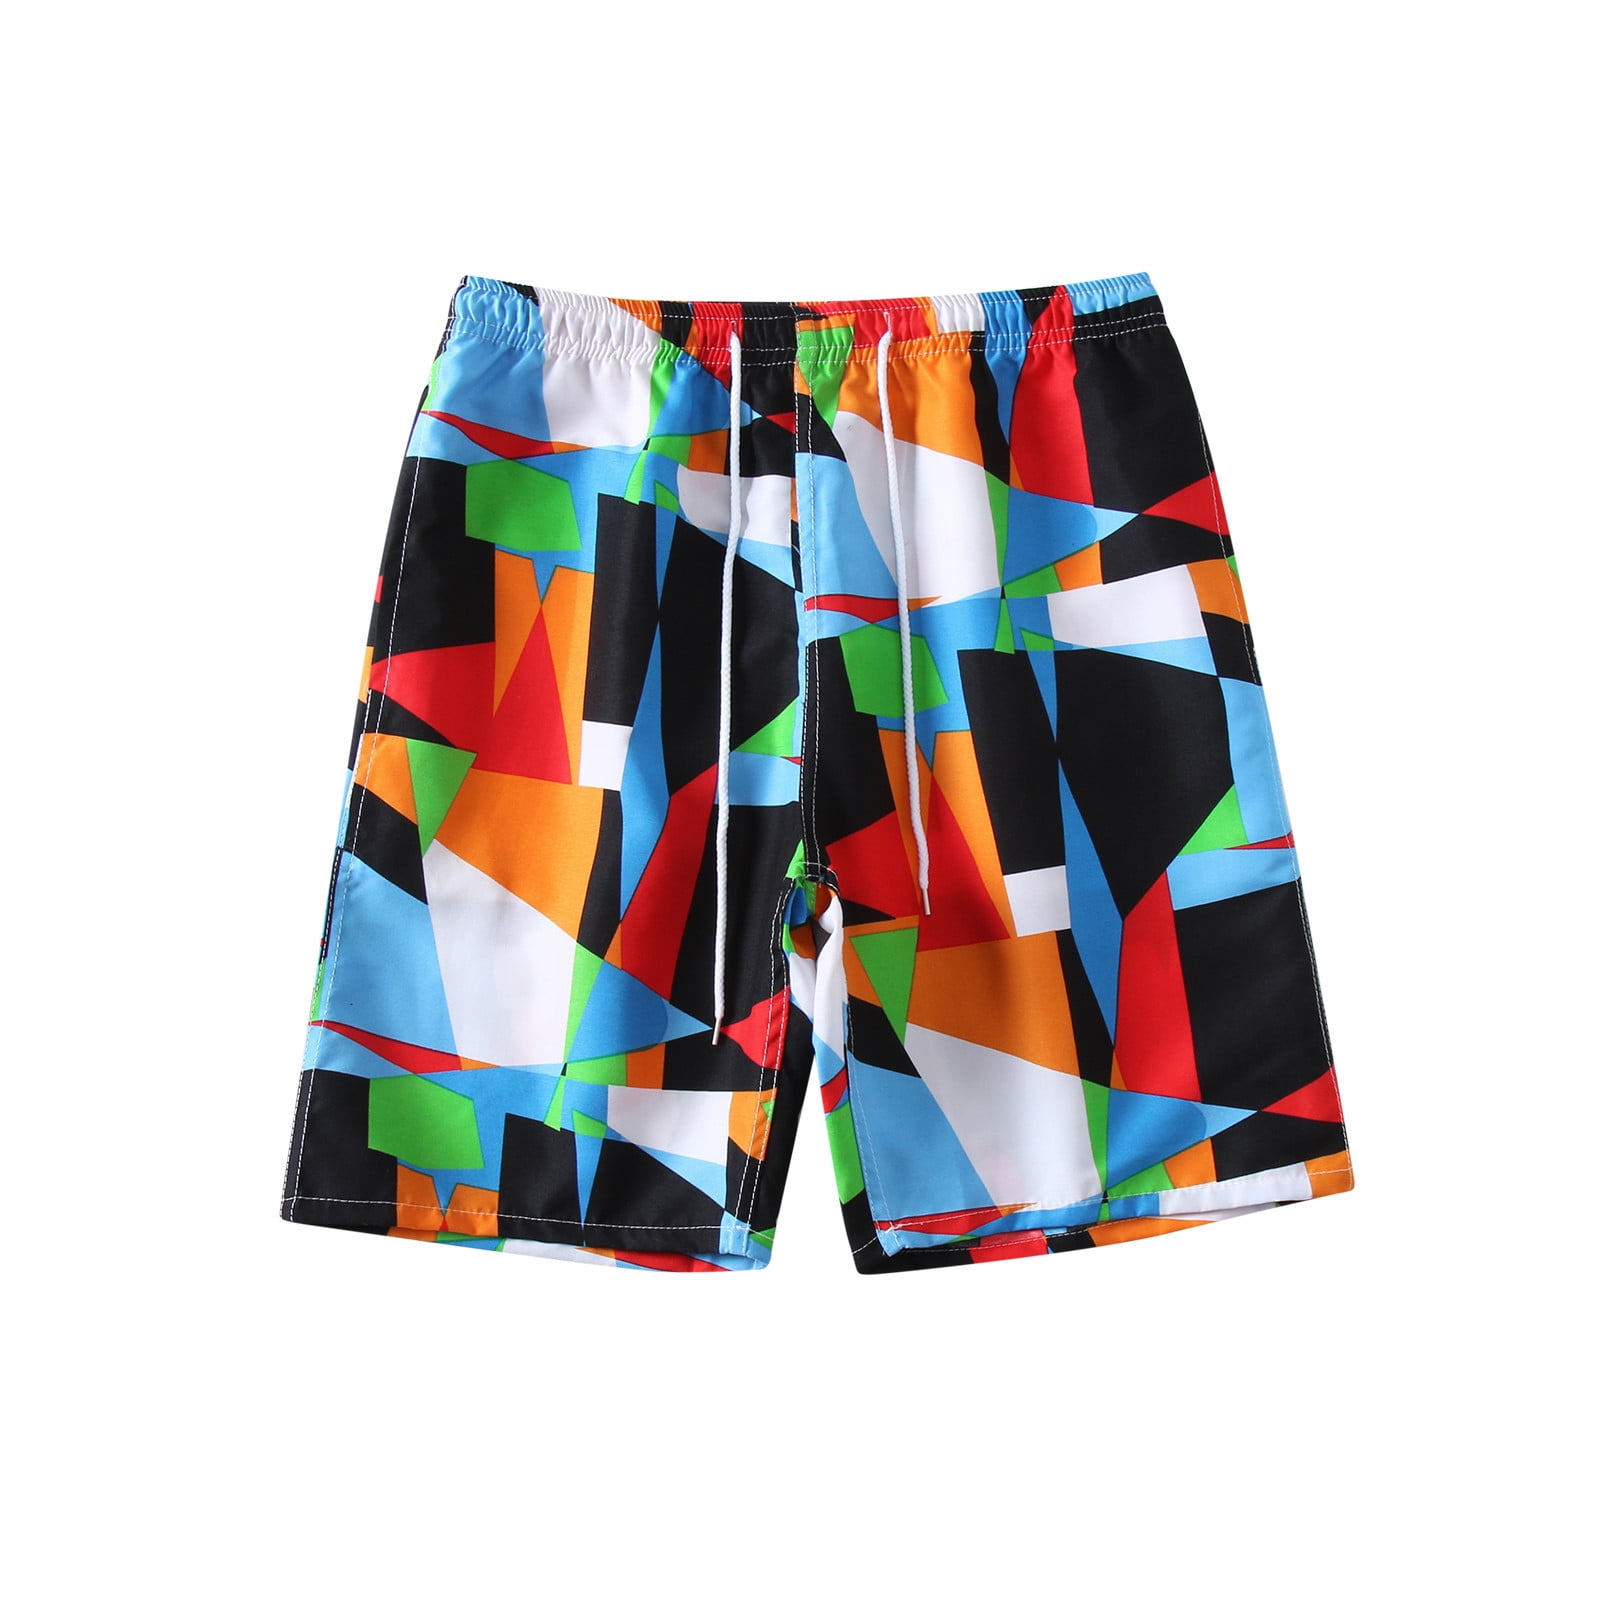 HSMQHJWE Ocean Pacific Shorts For Men Board Shorts With Zipper Men ...